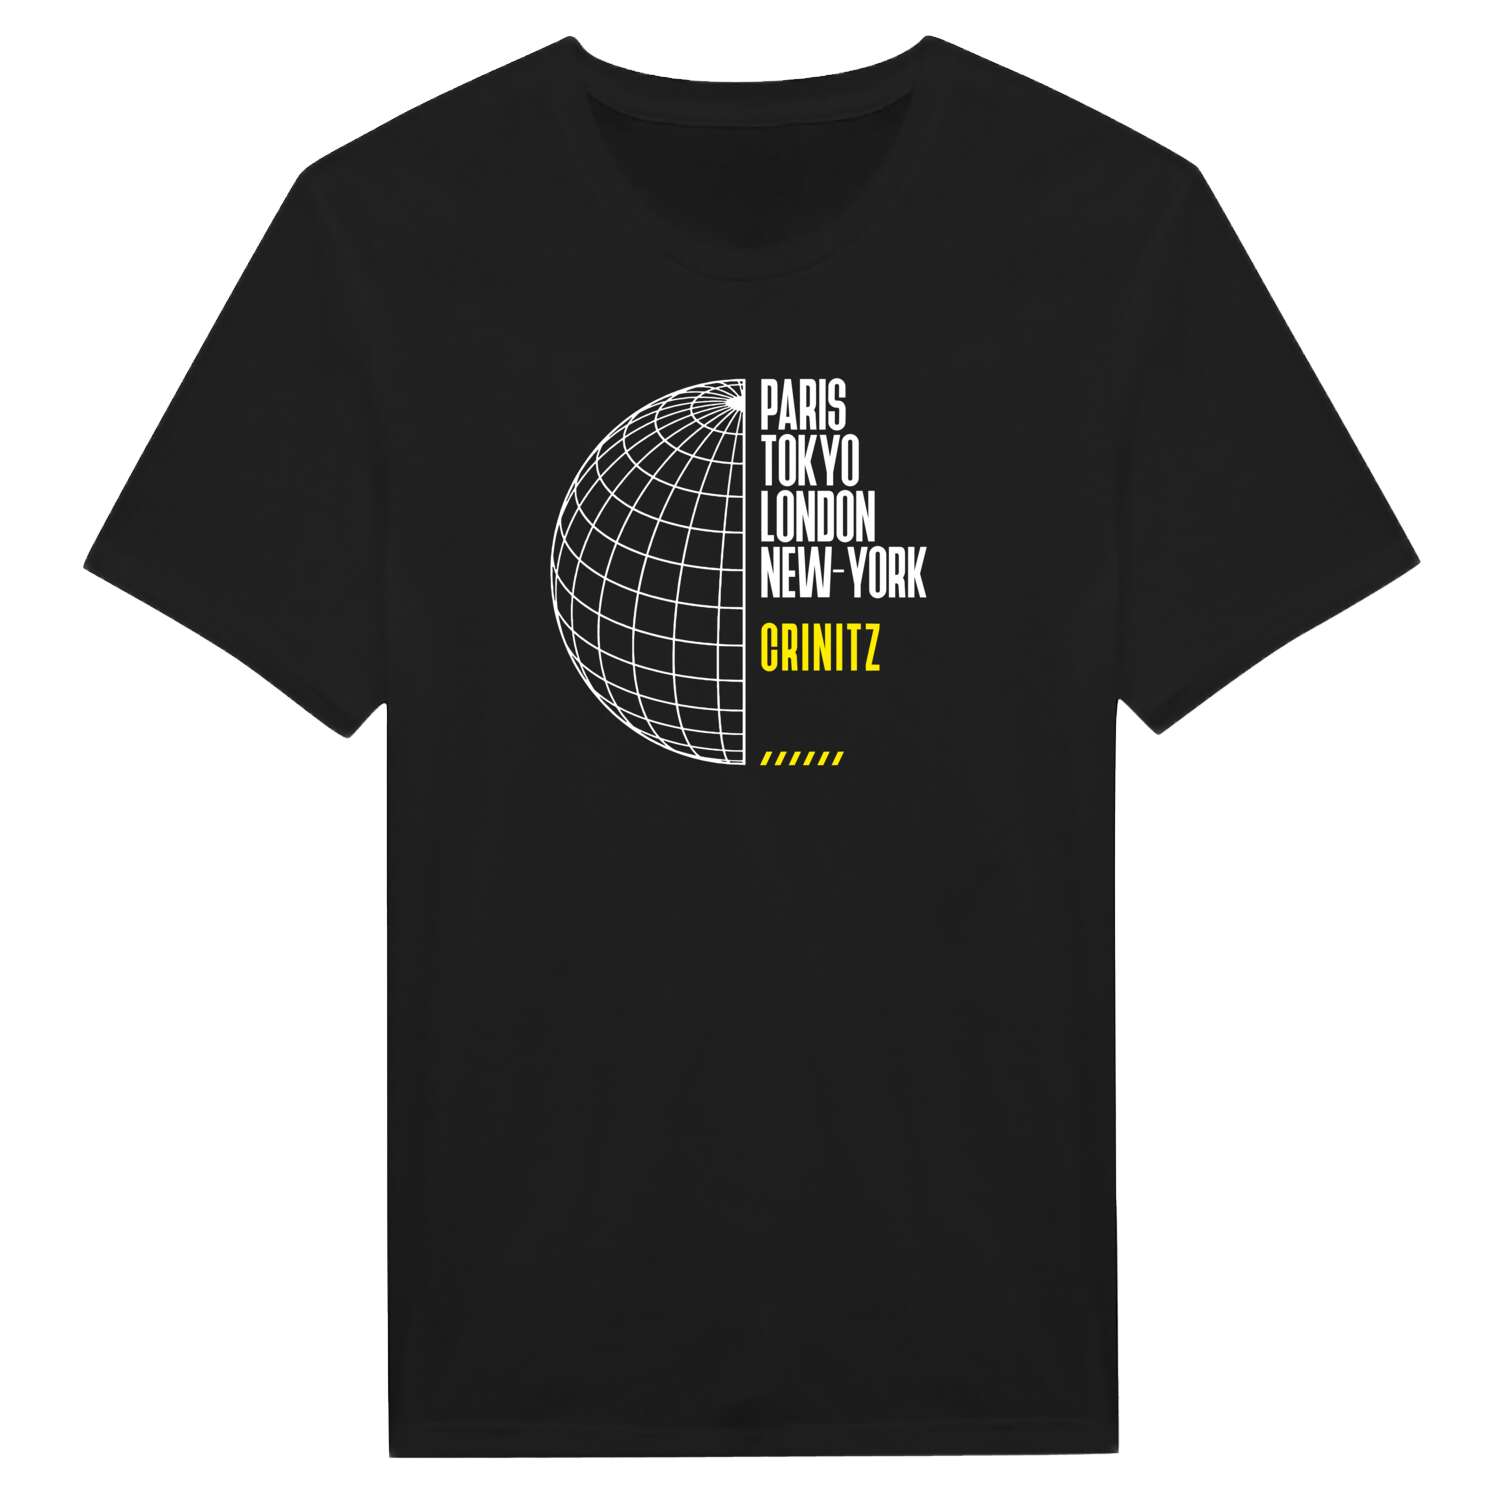 Crinitz T-Shirt »Paris Tokyo London«